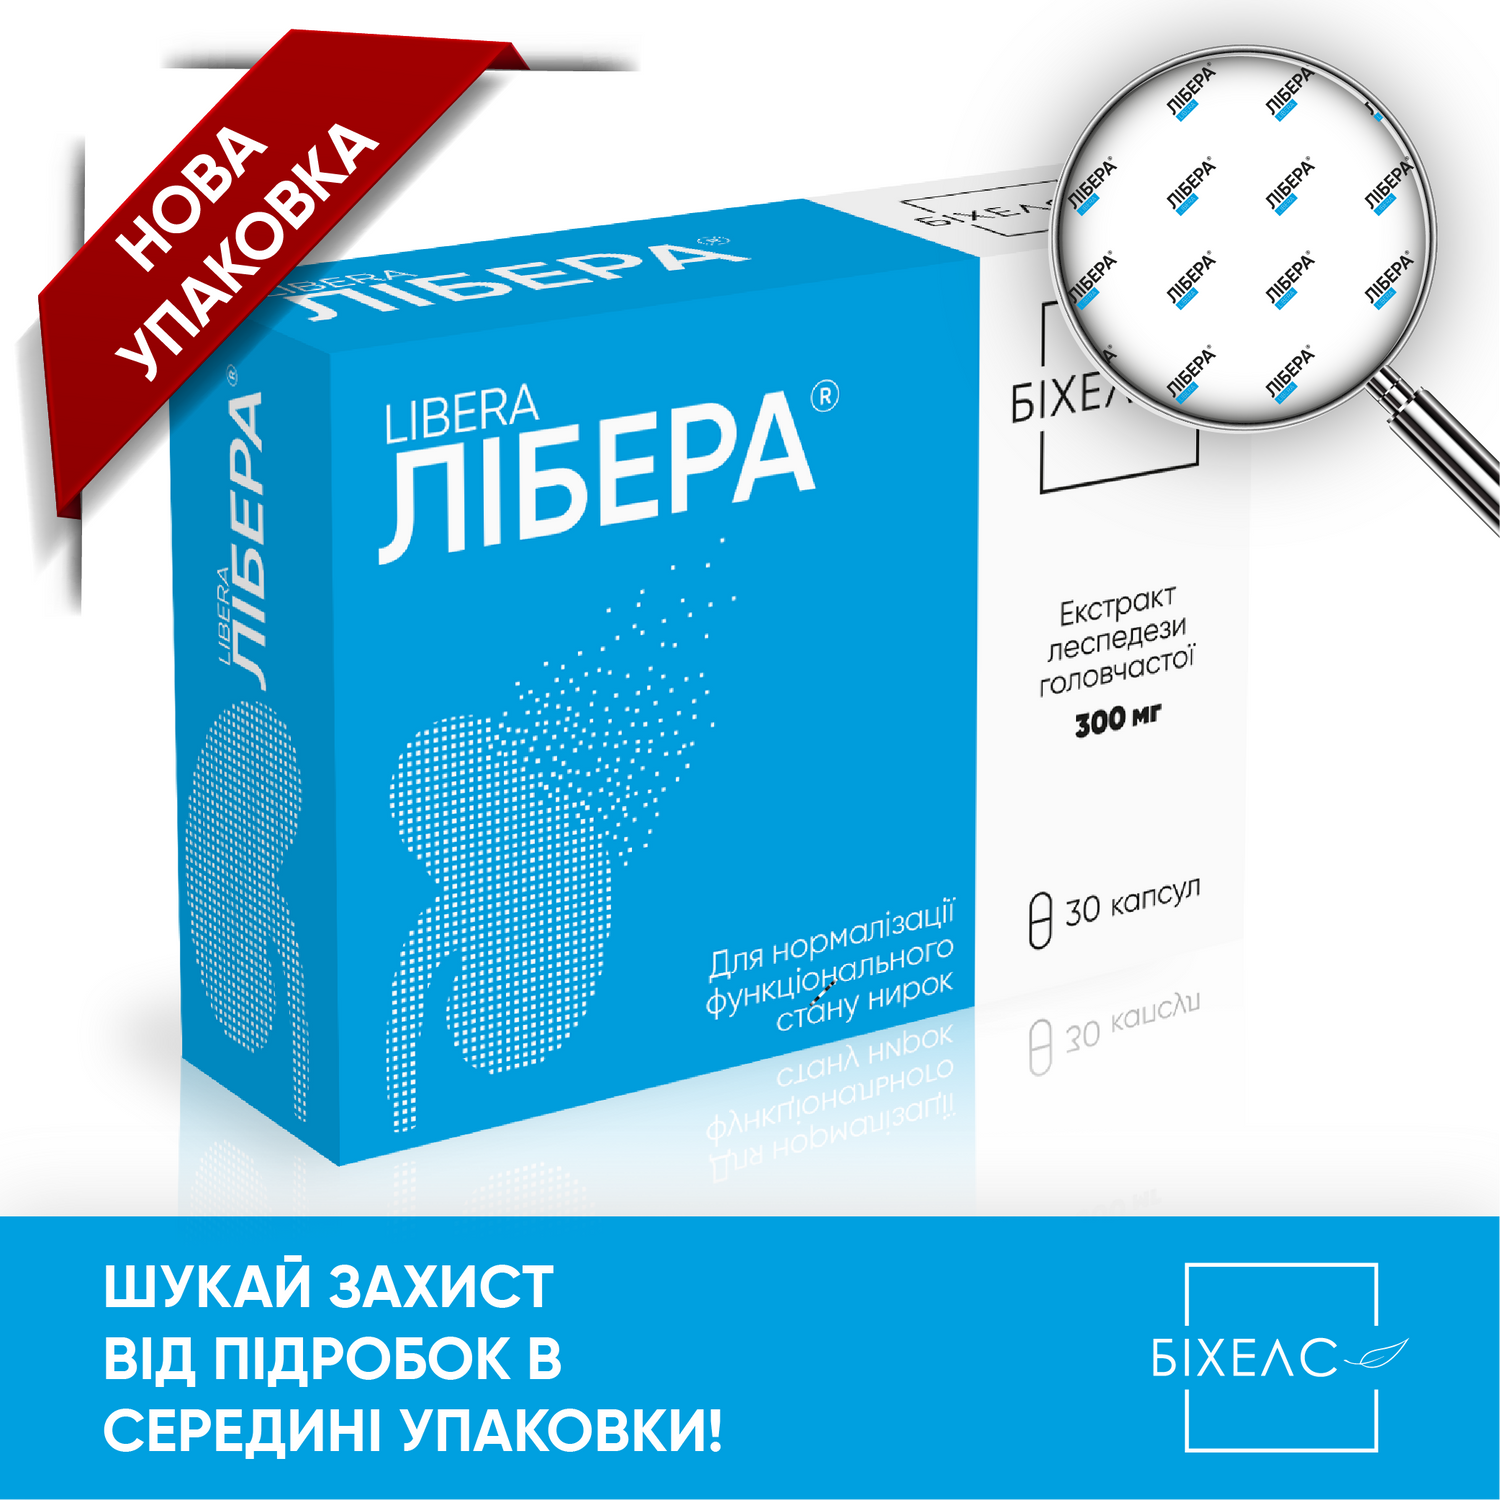 Libera capsules No. 30 manufacturer's price, food supplement, photo – 1